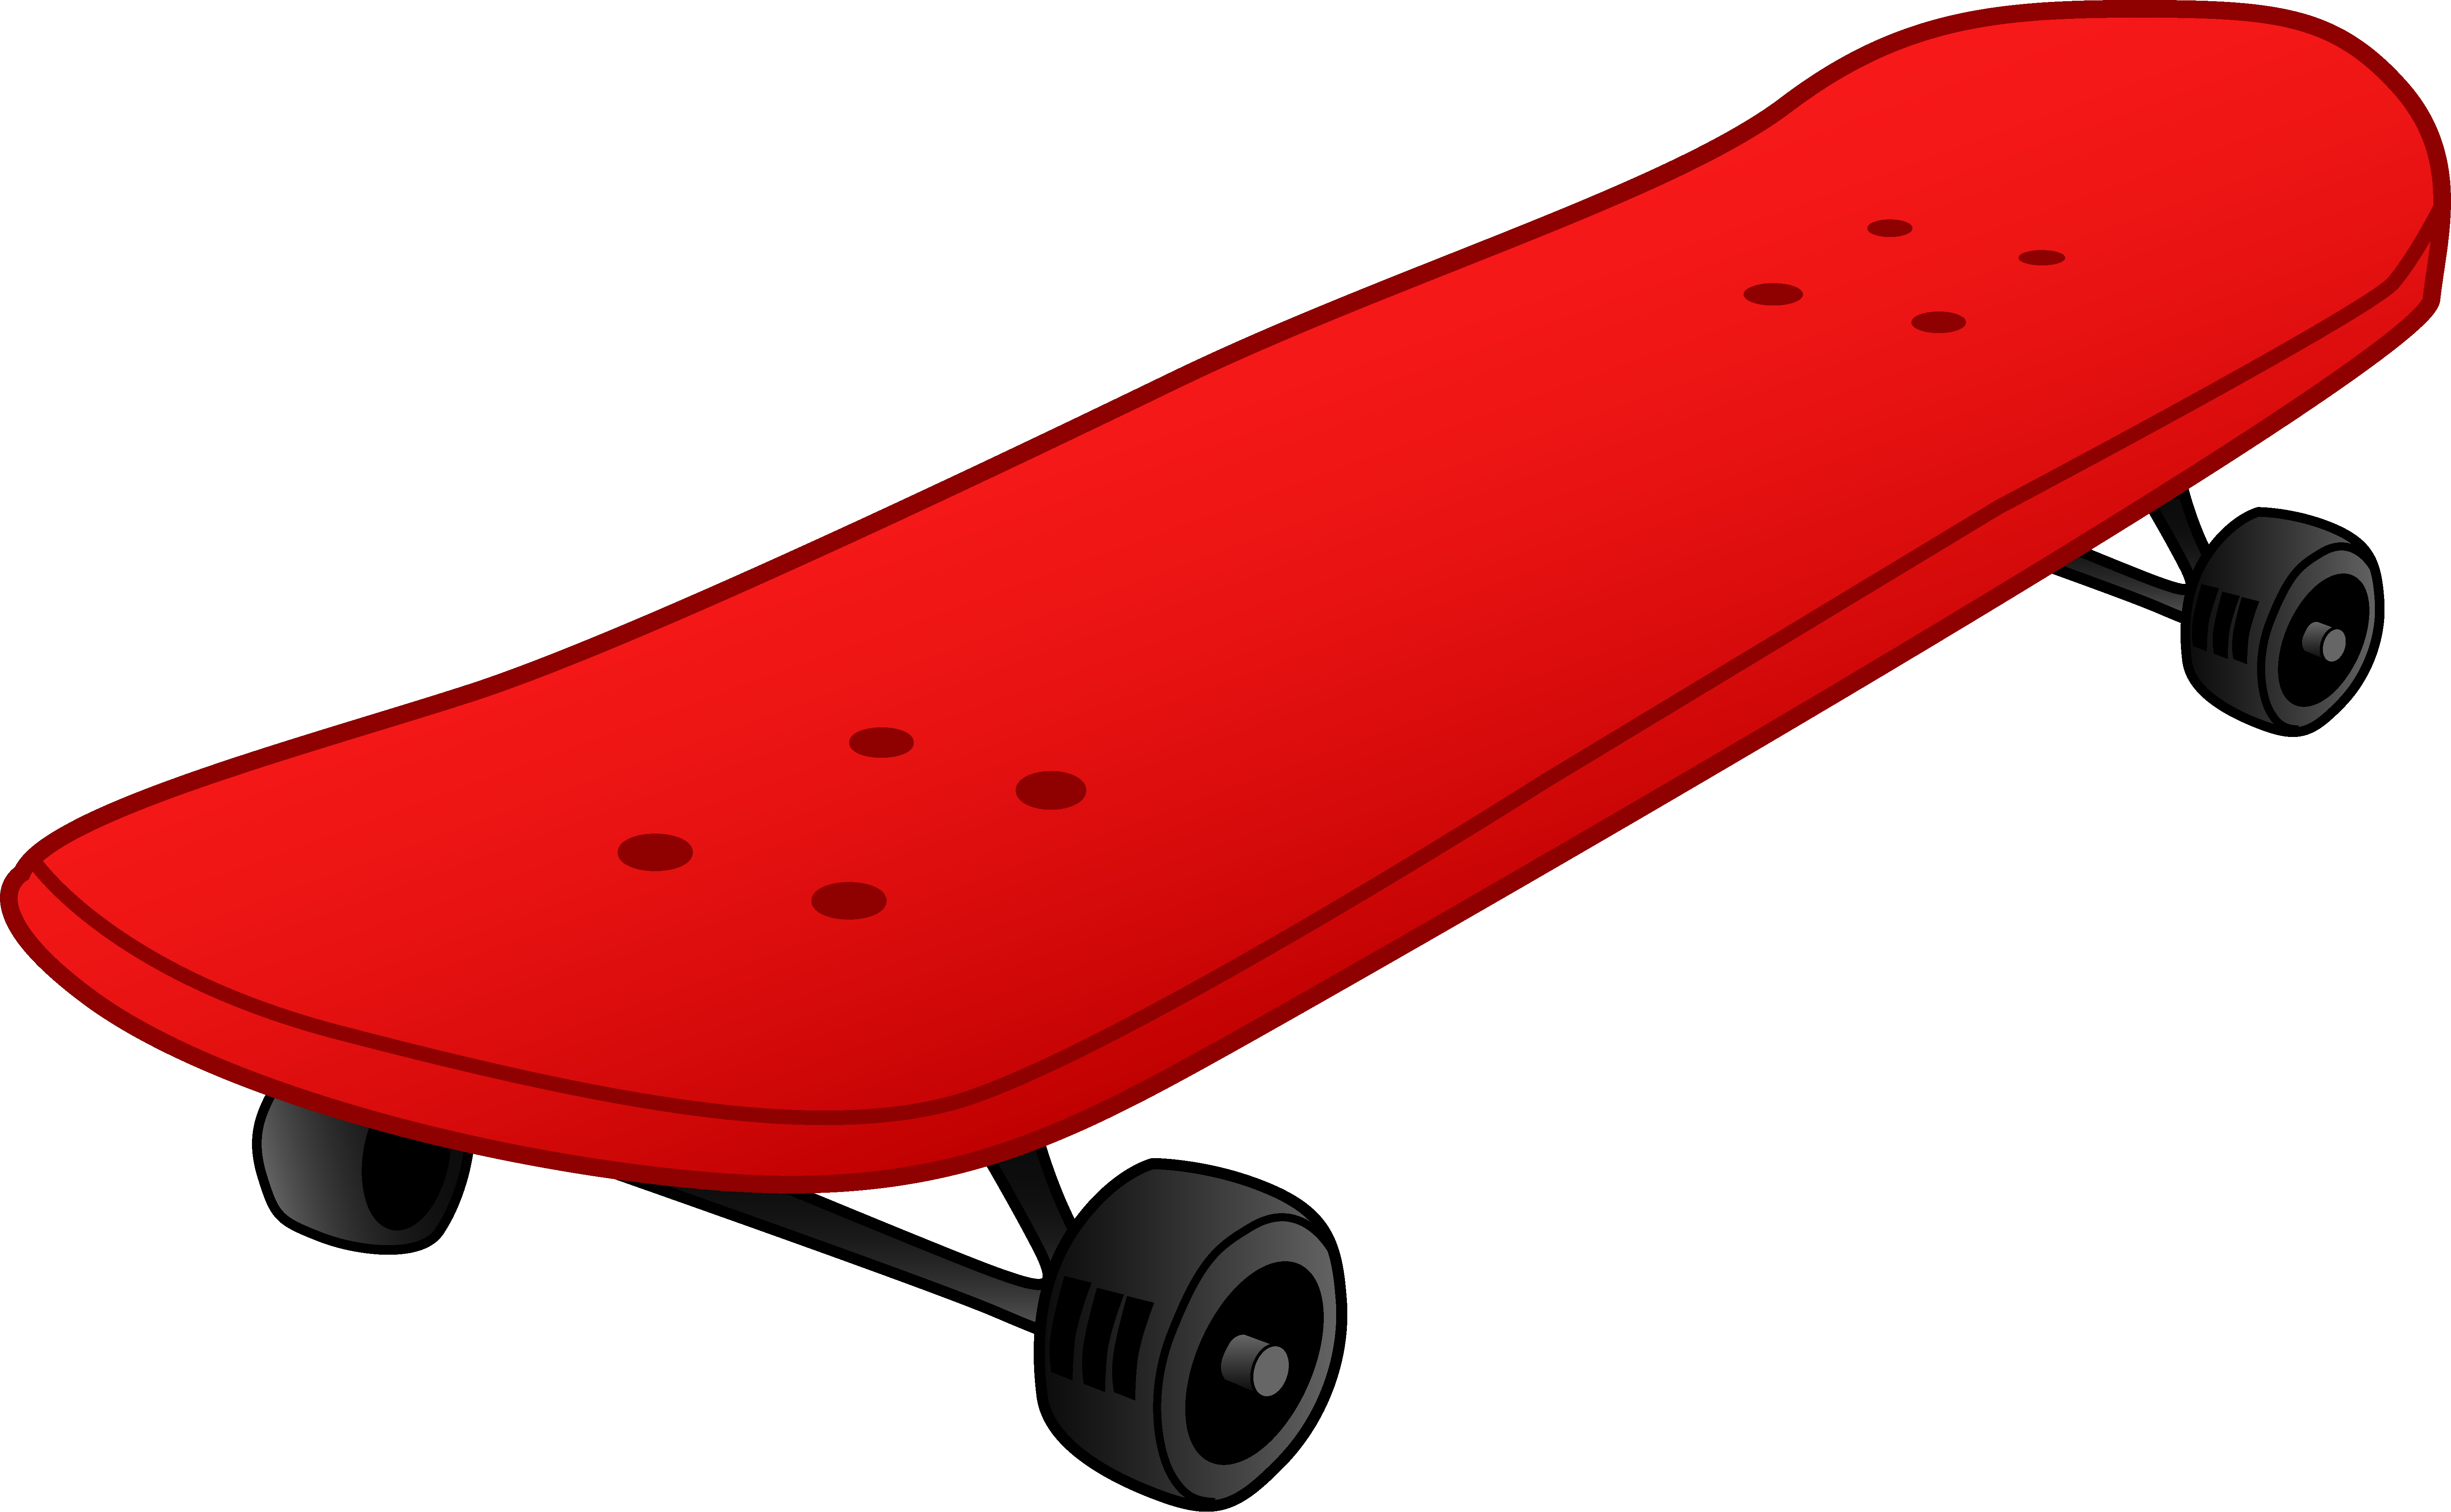 Skateboard Clipart | Free Download Clip Art | Free Clip Art | on ...